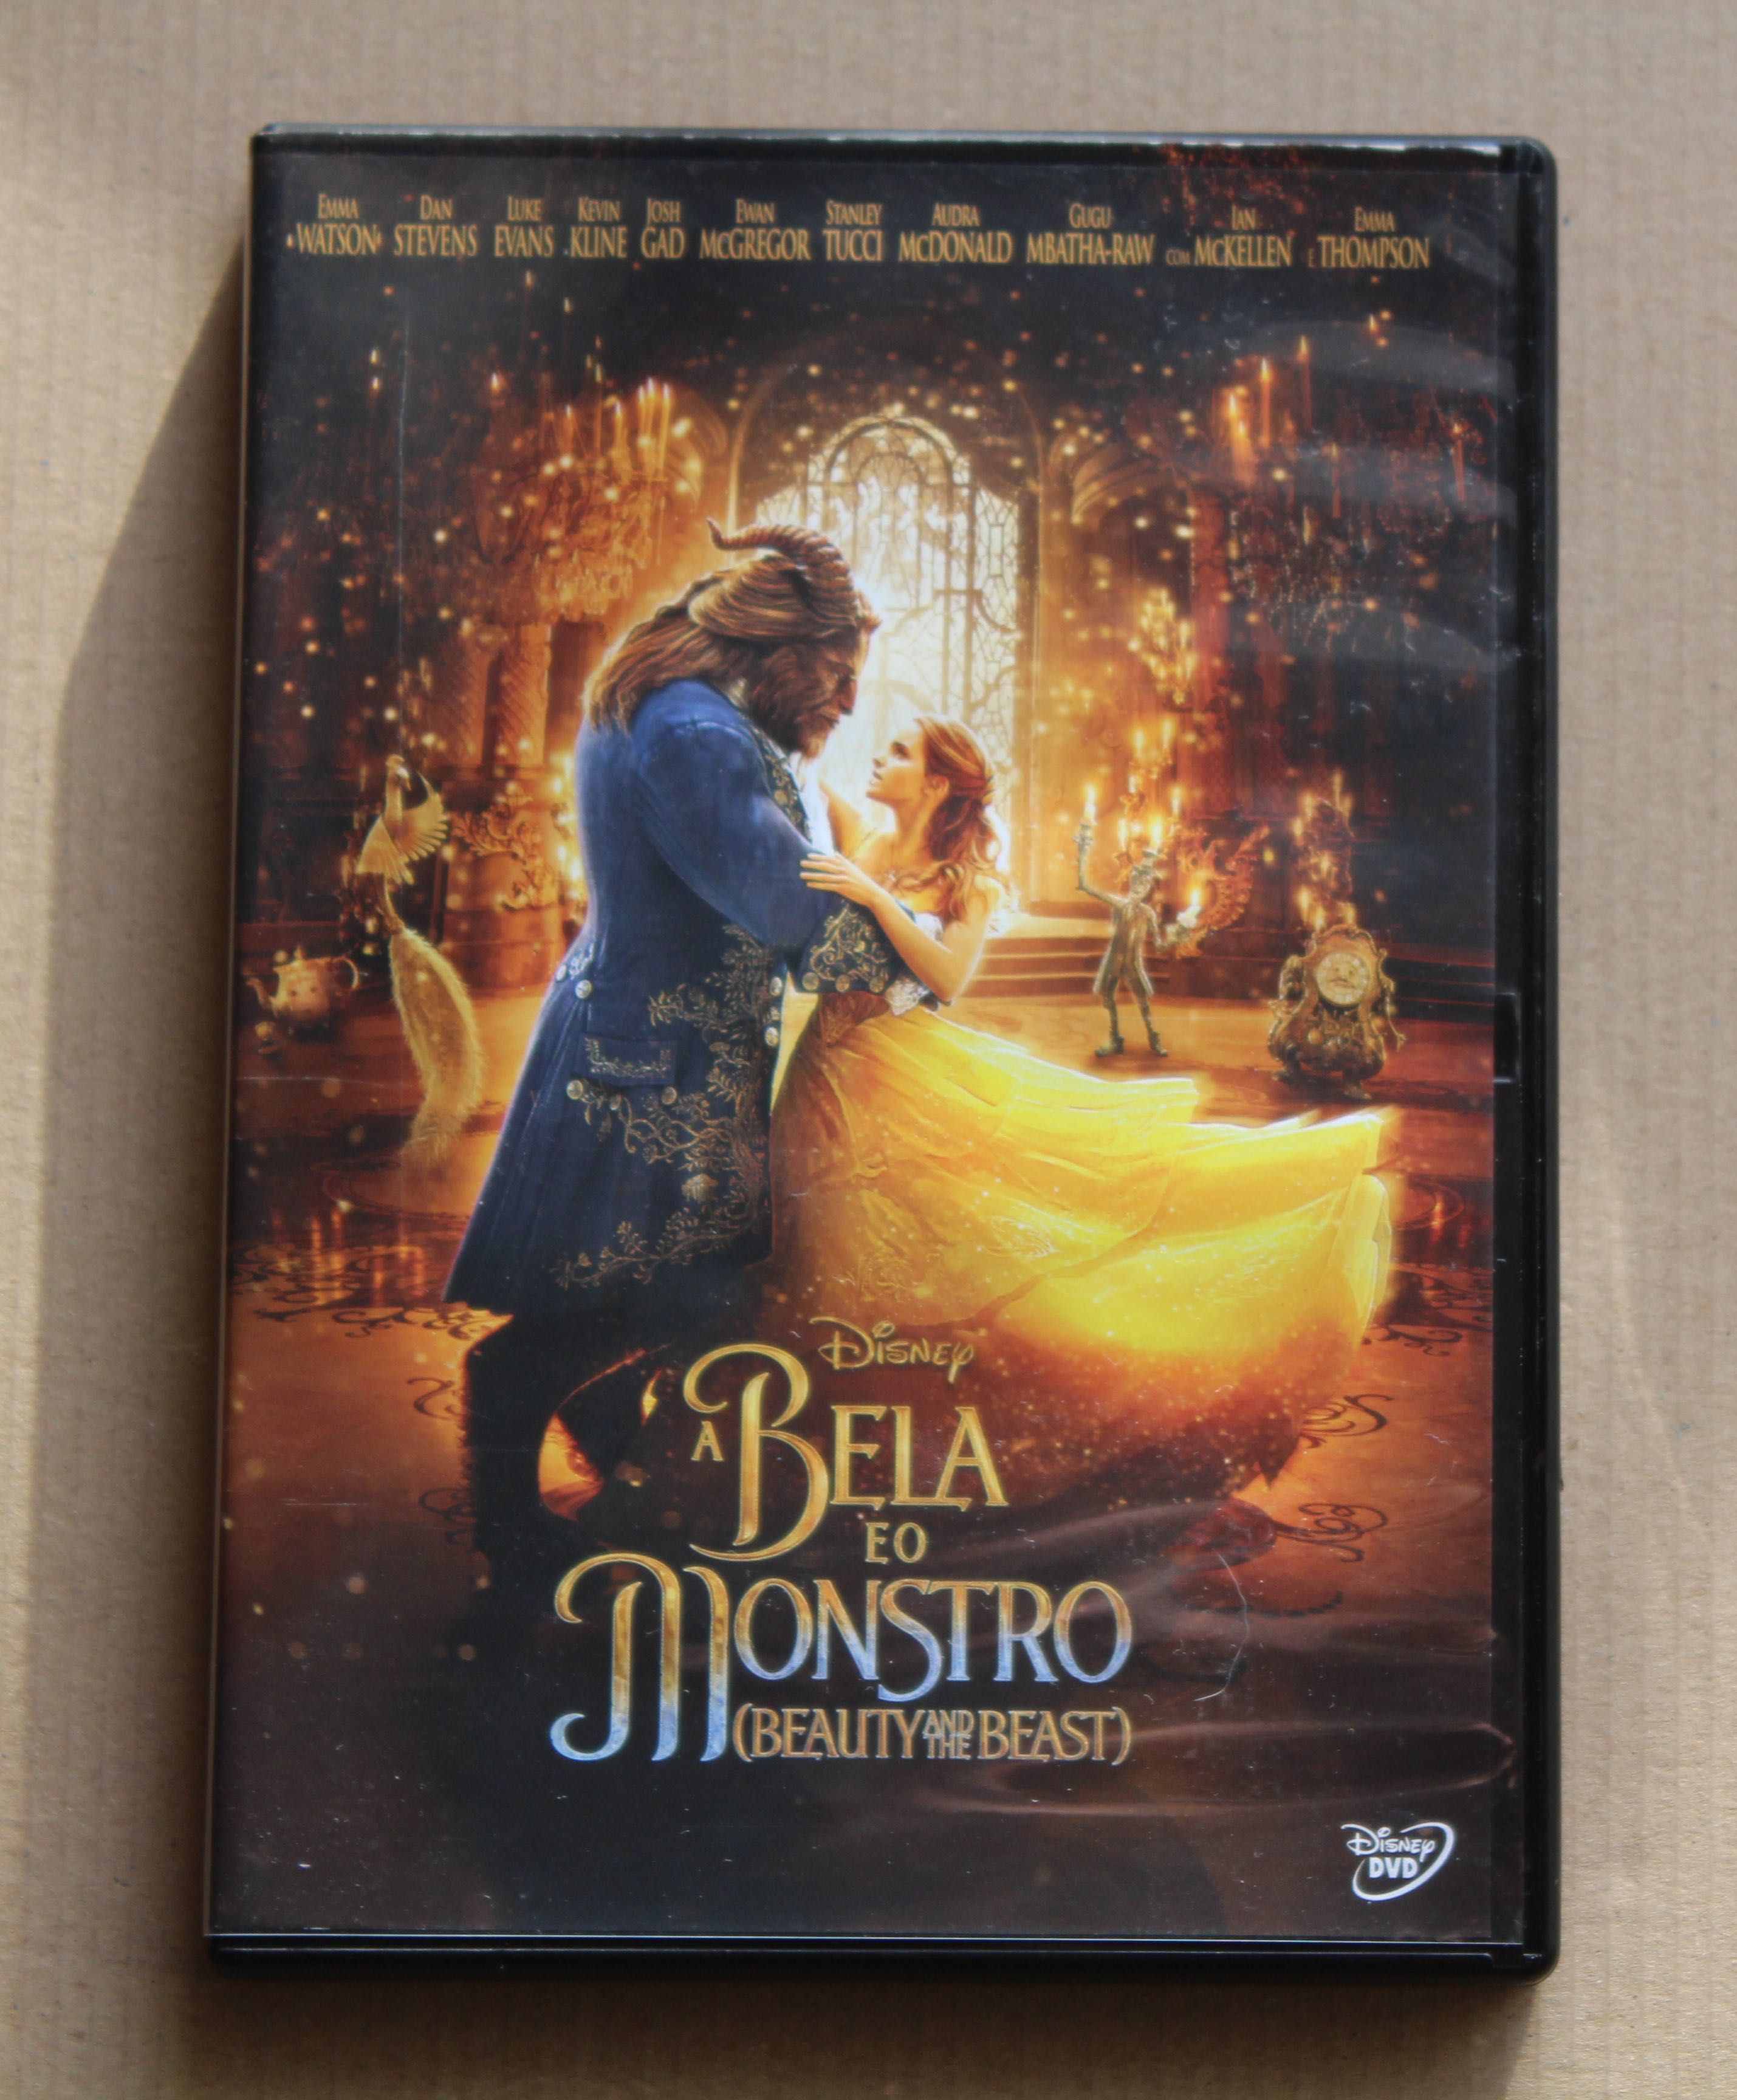 Filme DVD "A Bela e o Monstro (Beauty and the Beast)" (2017)